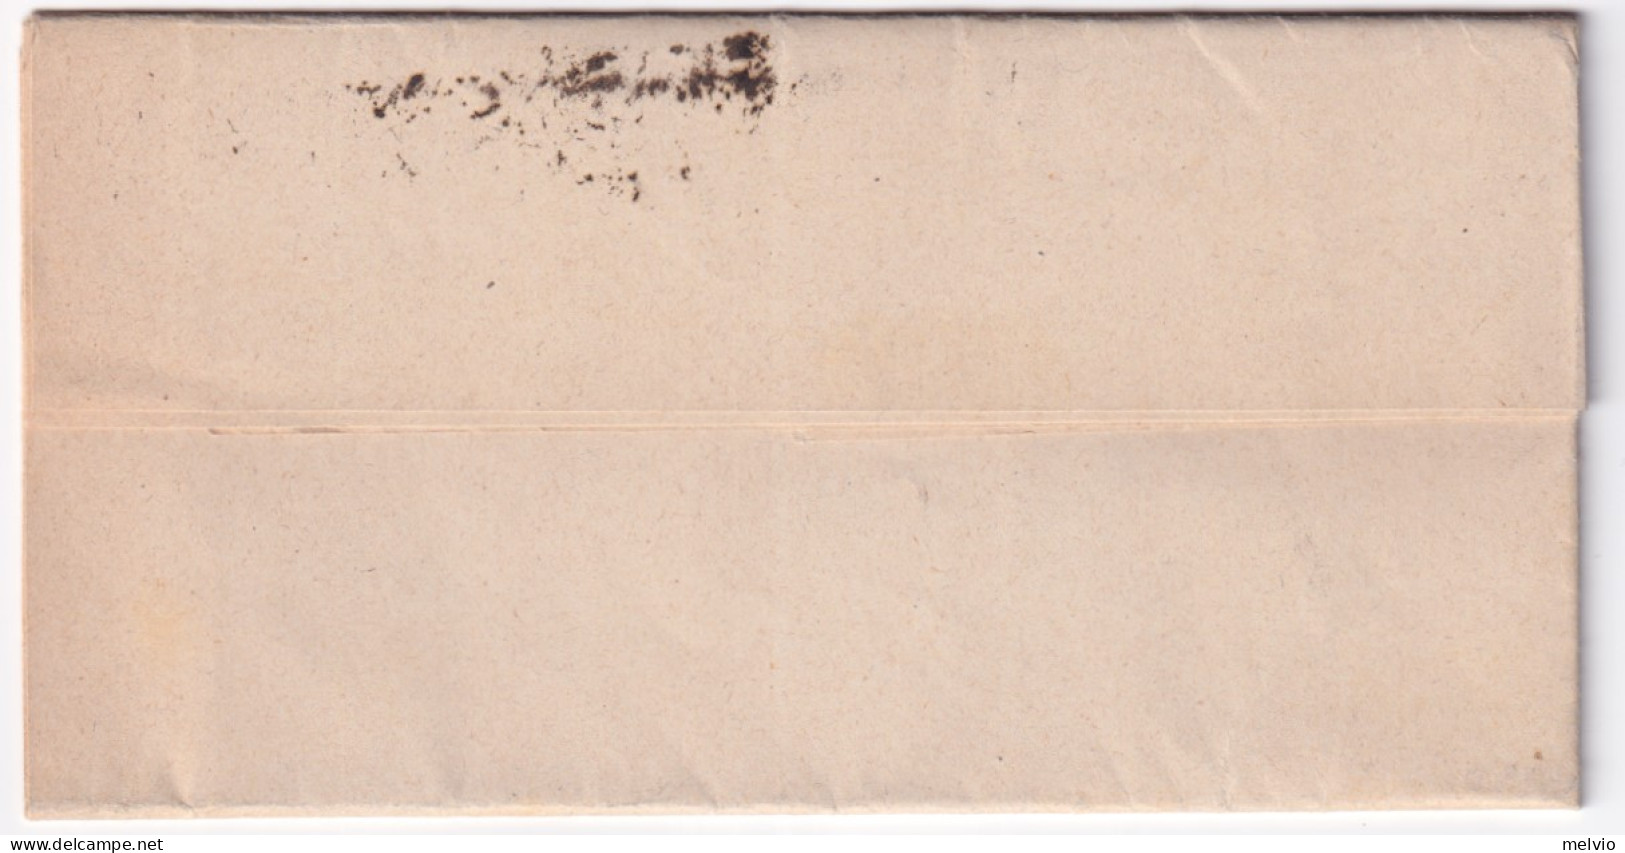 1889-Pontagna Corsivo Collettoria Su Piego Edolo (2.1) - Storia Postale